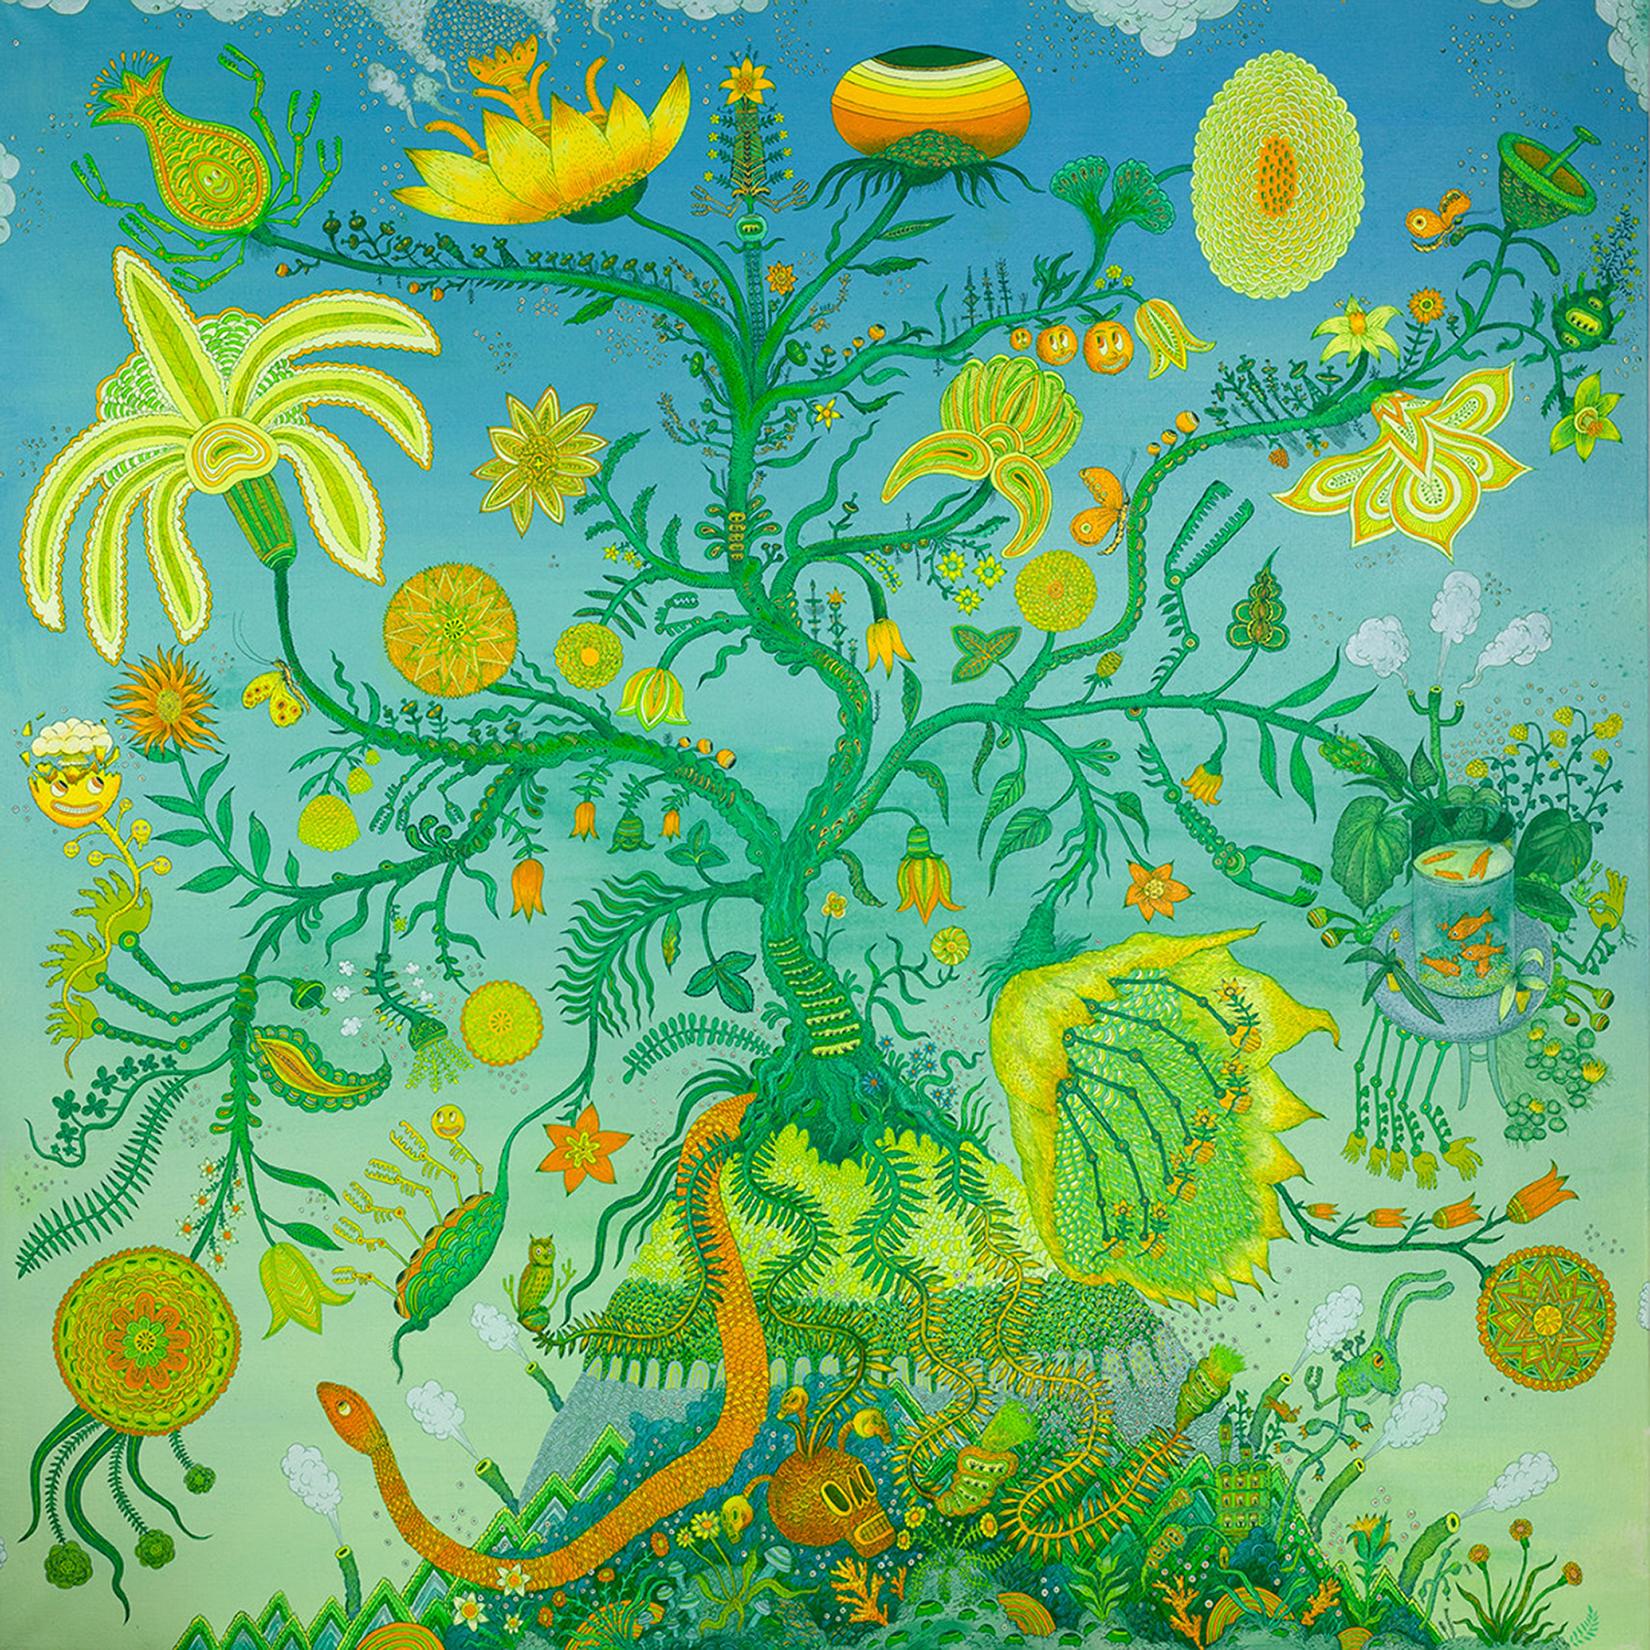 Peter Hamlin Abstract Painting - Tree of Life, Blue Green Yellow Orange Futuristic Botanical Landscape, Animals